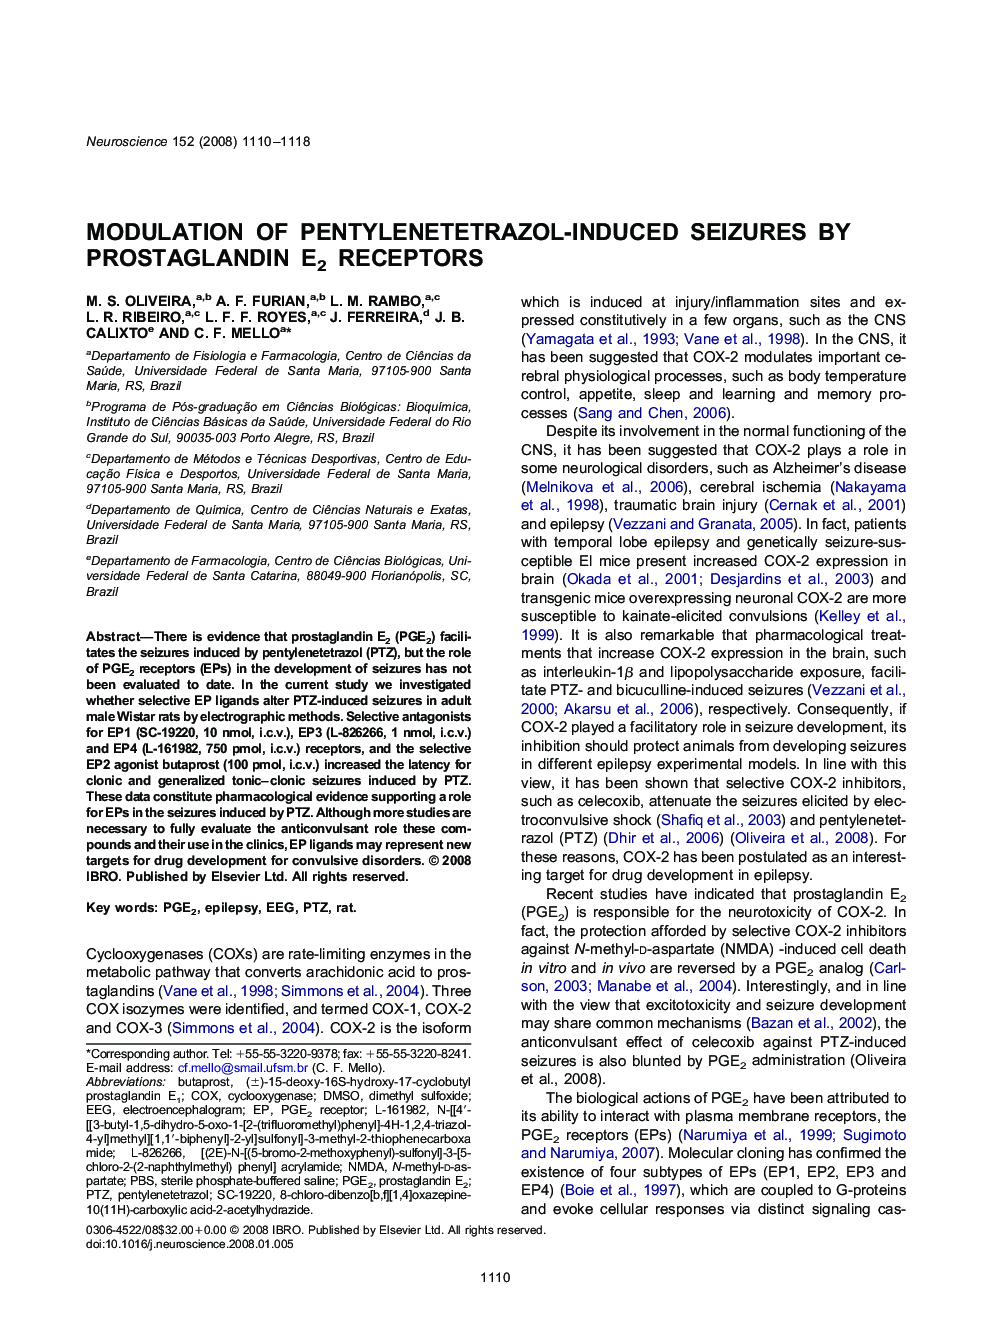 Modulation of pentylenetetrazol-induced seizures by prostaglandin E2 receptors